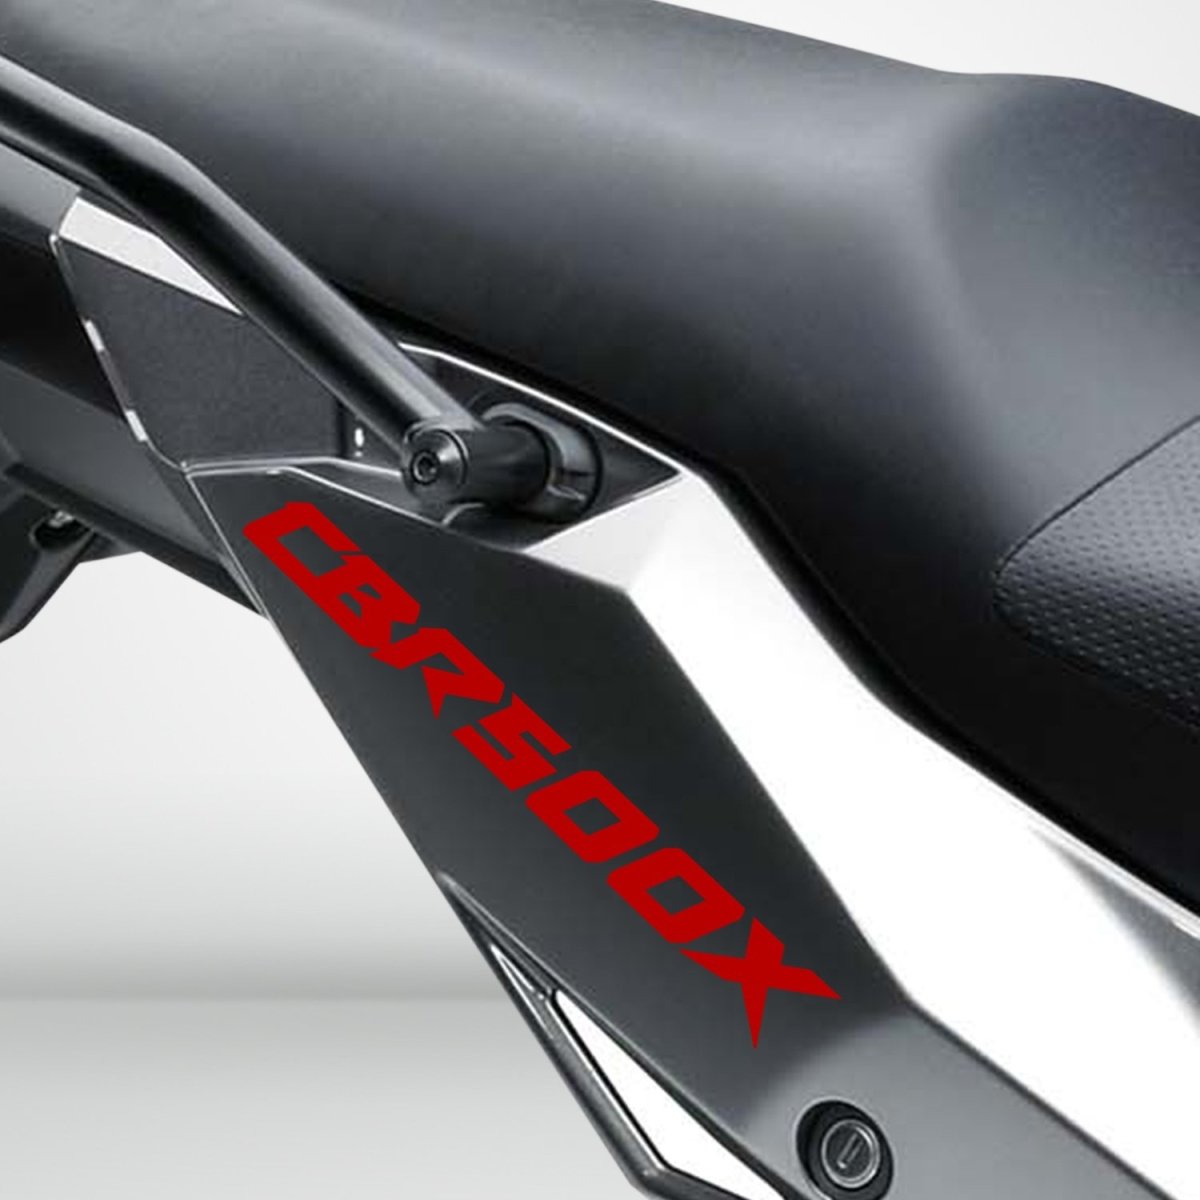 Motorcycle Superbike Sticker Decal Pack Waterproof High Quality for Honda CBR500X - Stickman Vinyls